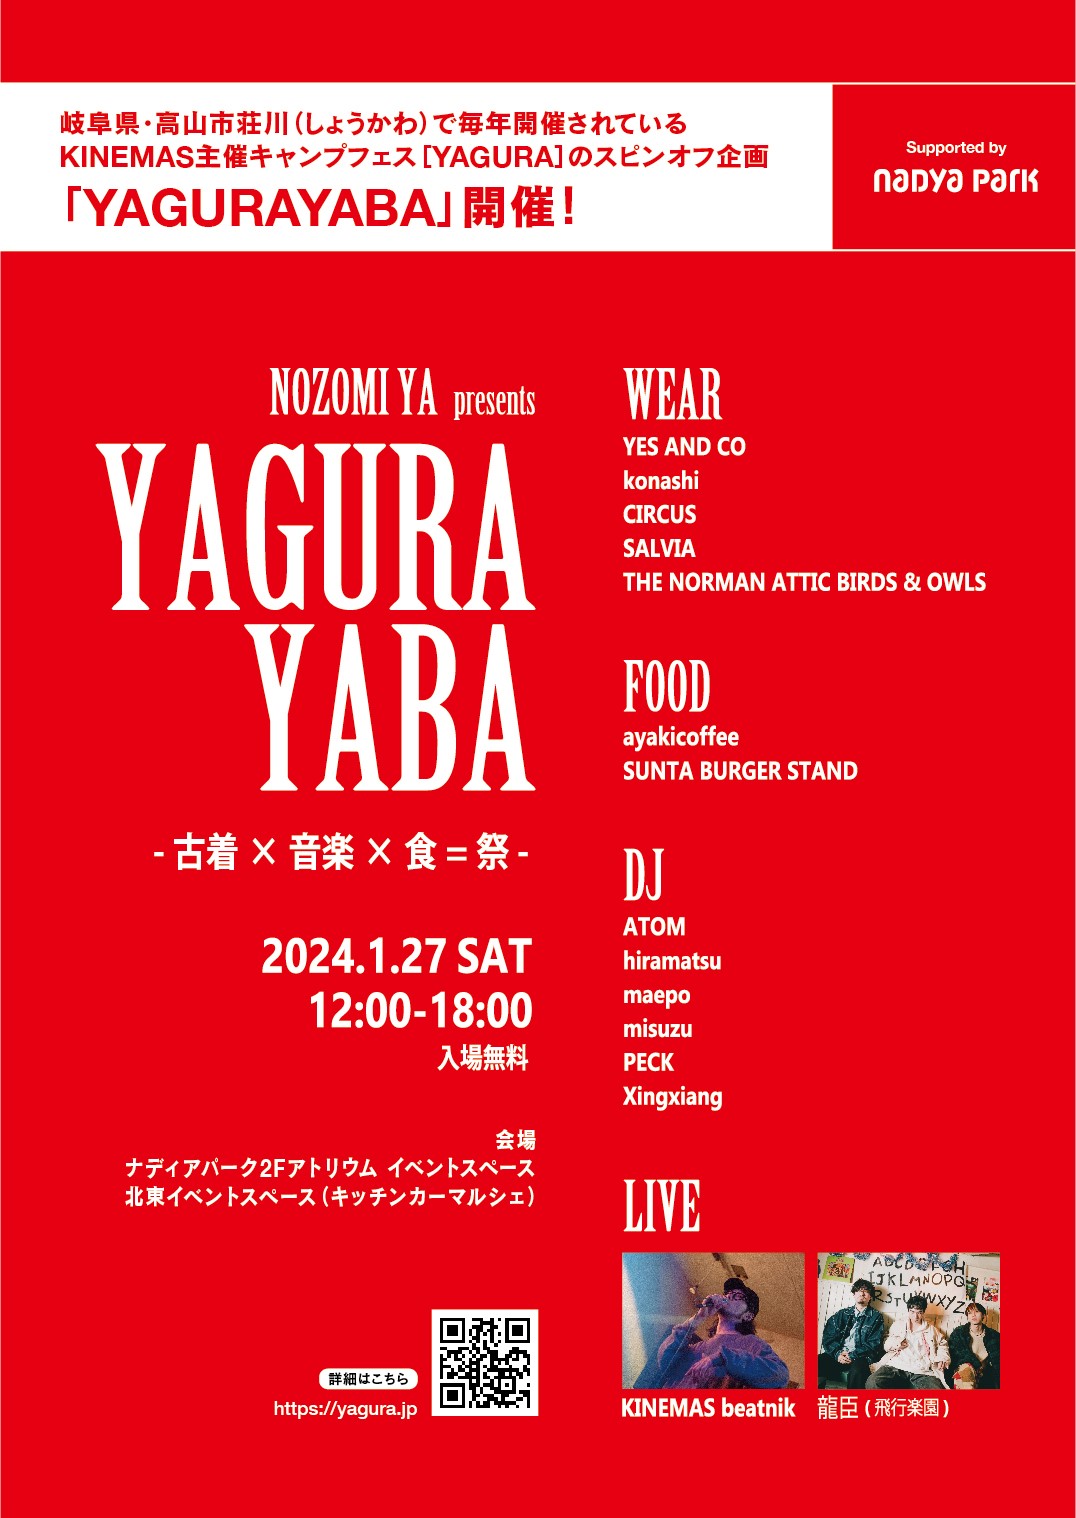 NOZOMI YA presents　[YAGURAYABA] Supported by NADYA PARK